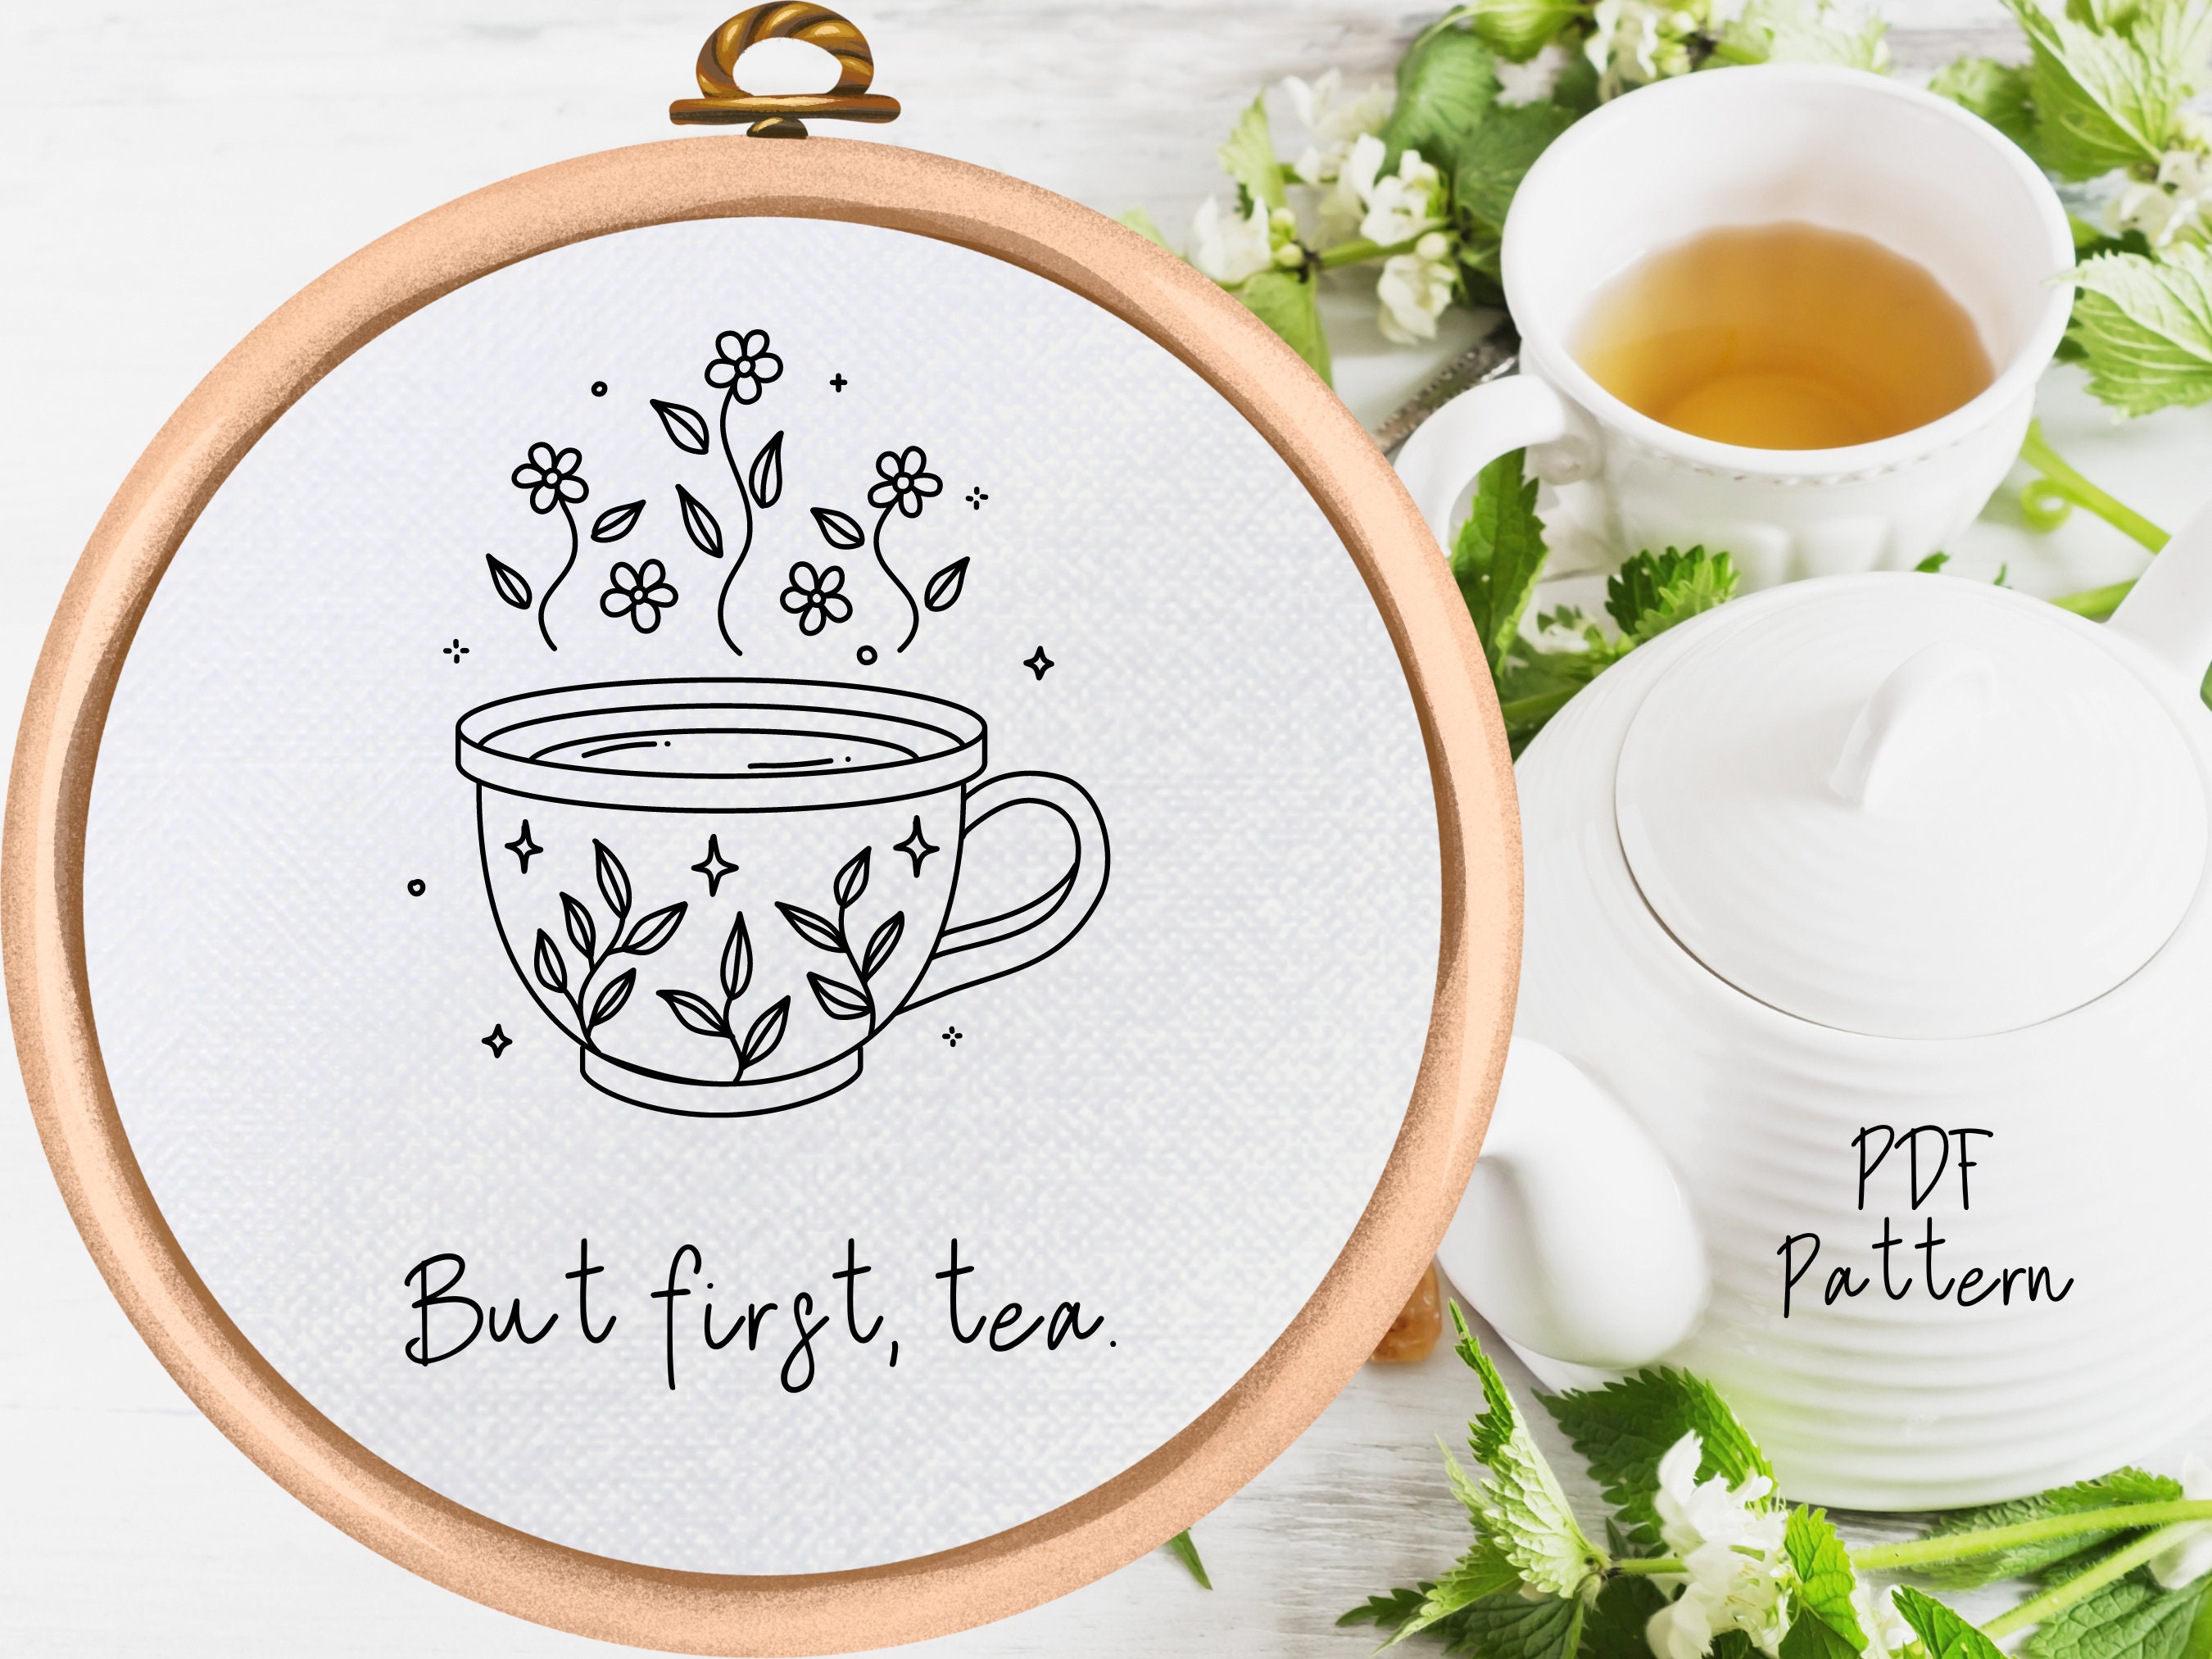 I DO】Persimmon dyed tea mat handmade double-sided embroidery tea